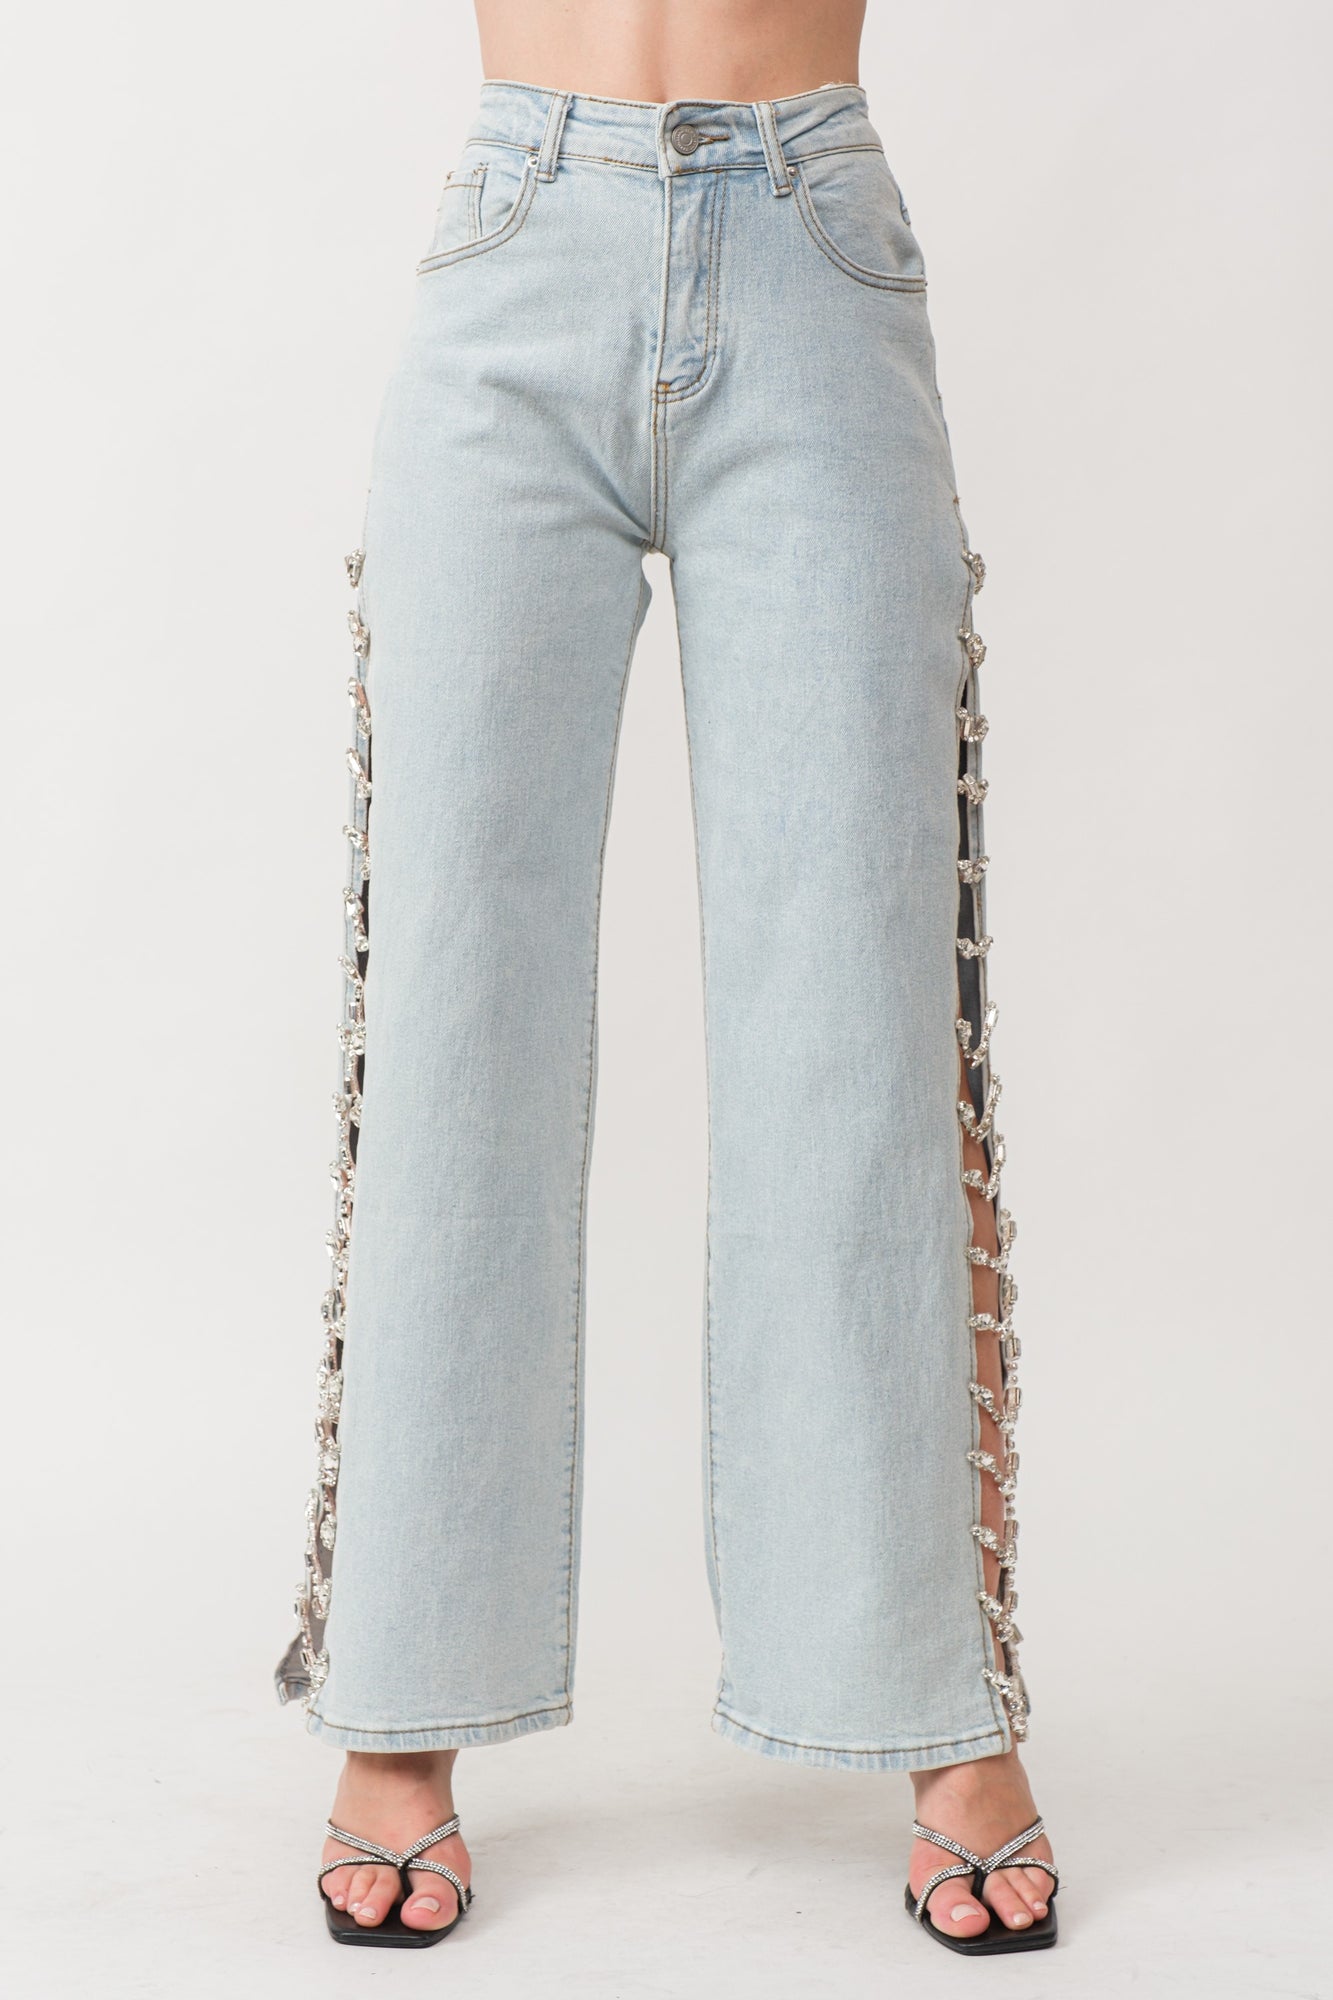 Rhinestone Embellished Jeans with Side Slit